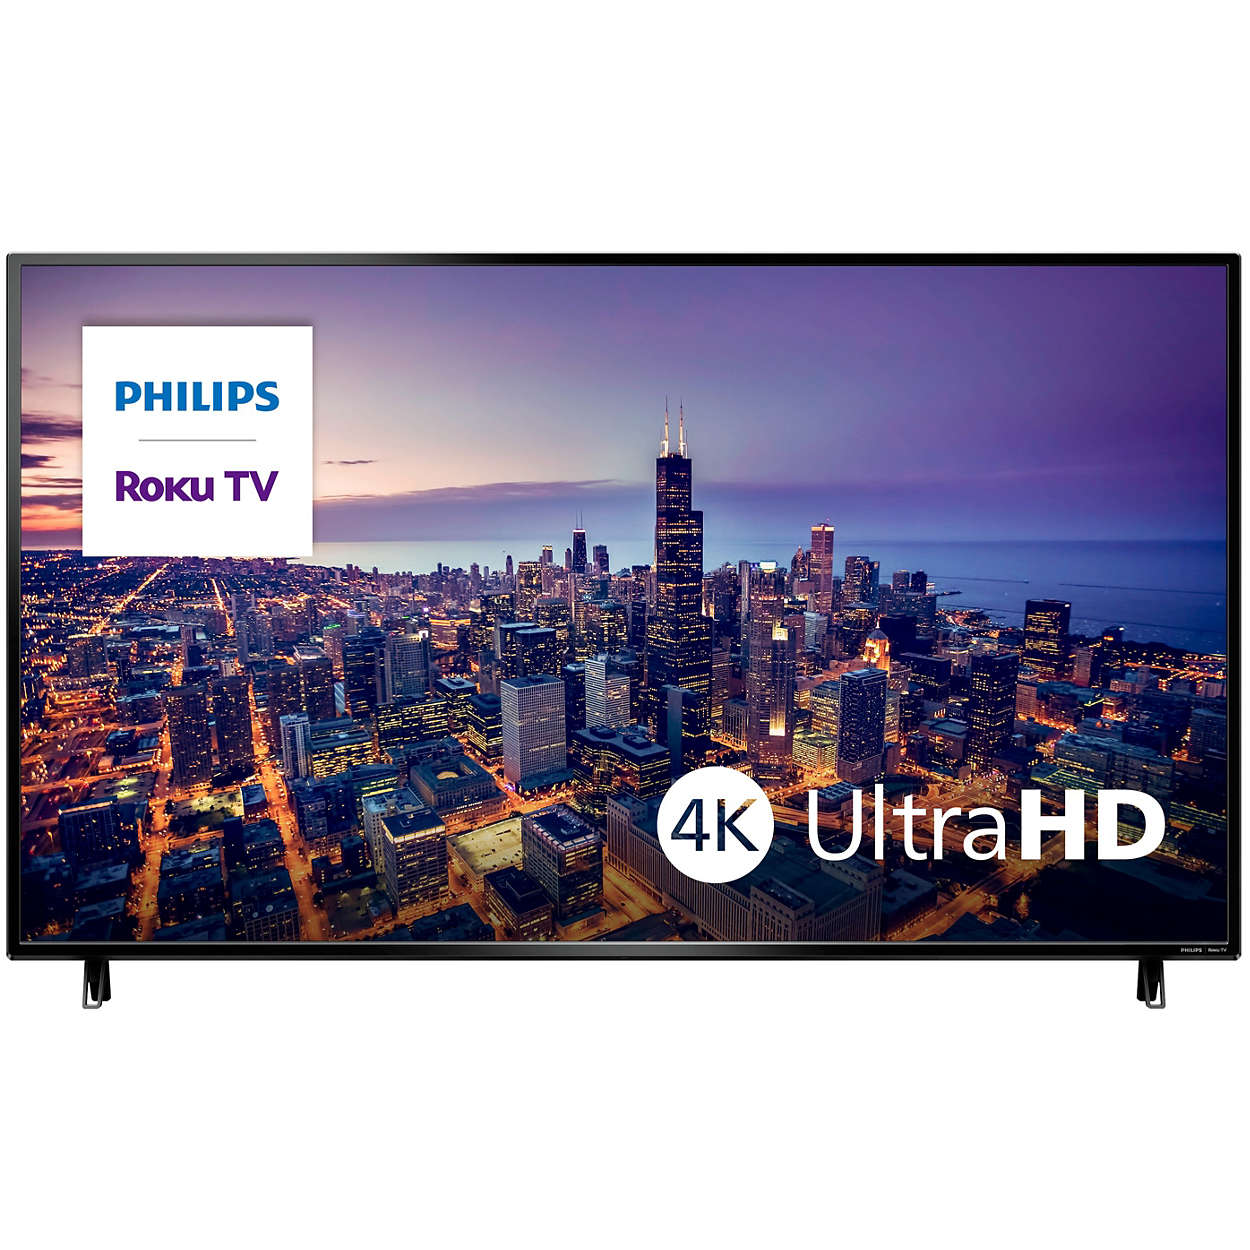 6000 series 4K UltraHD LED Roku TV 65PUL6553/F7